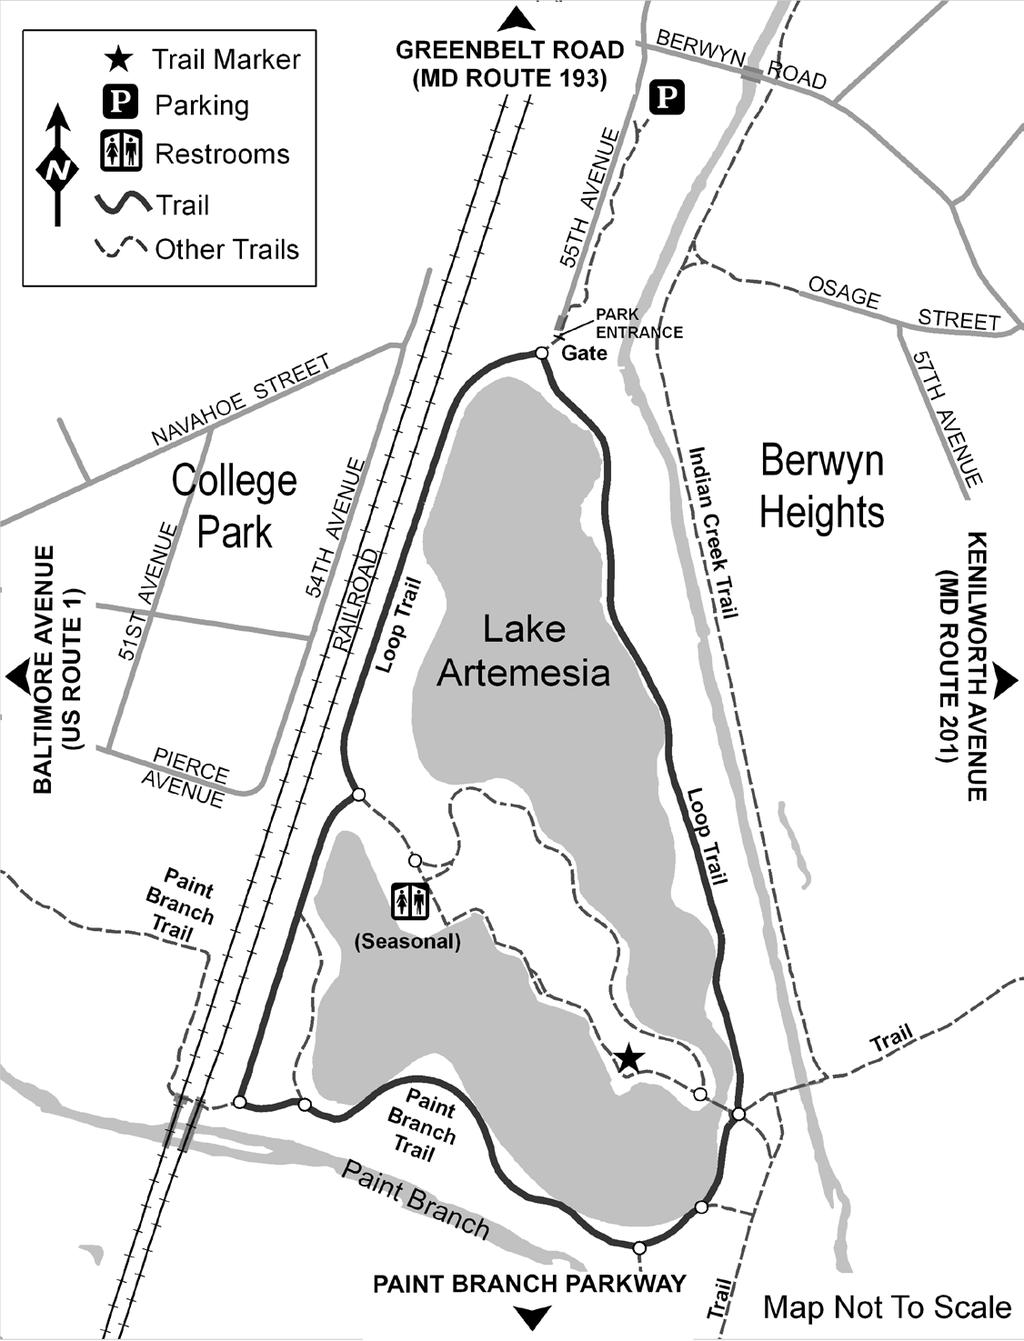 Lake Artemesia Loop Trail Location: 8200 55th Avenue, Berwyn Heights, MD 20740 Trail Length: 1.